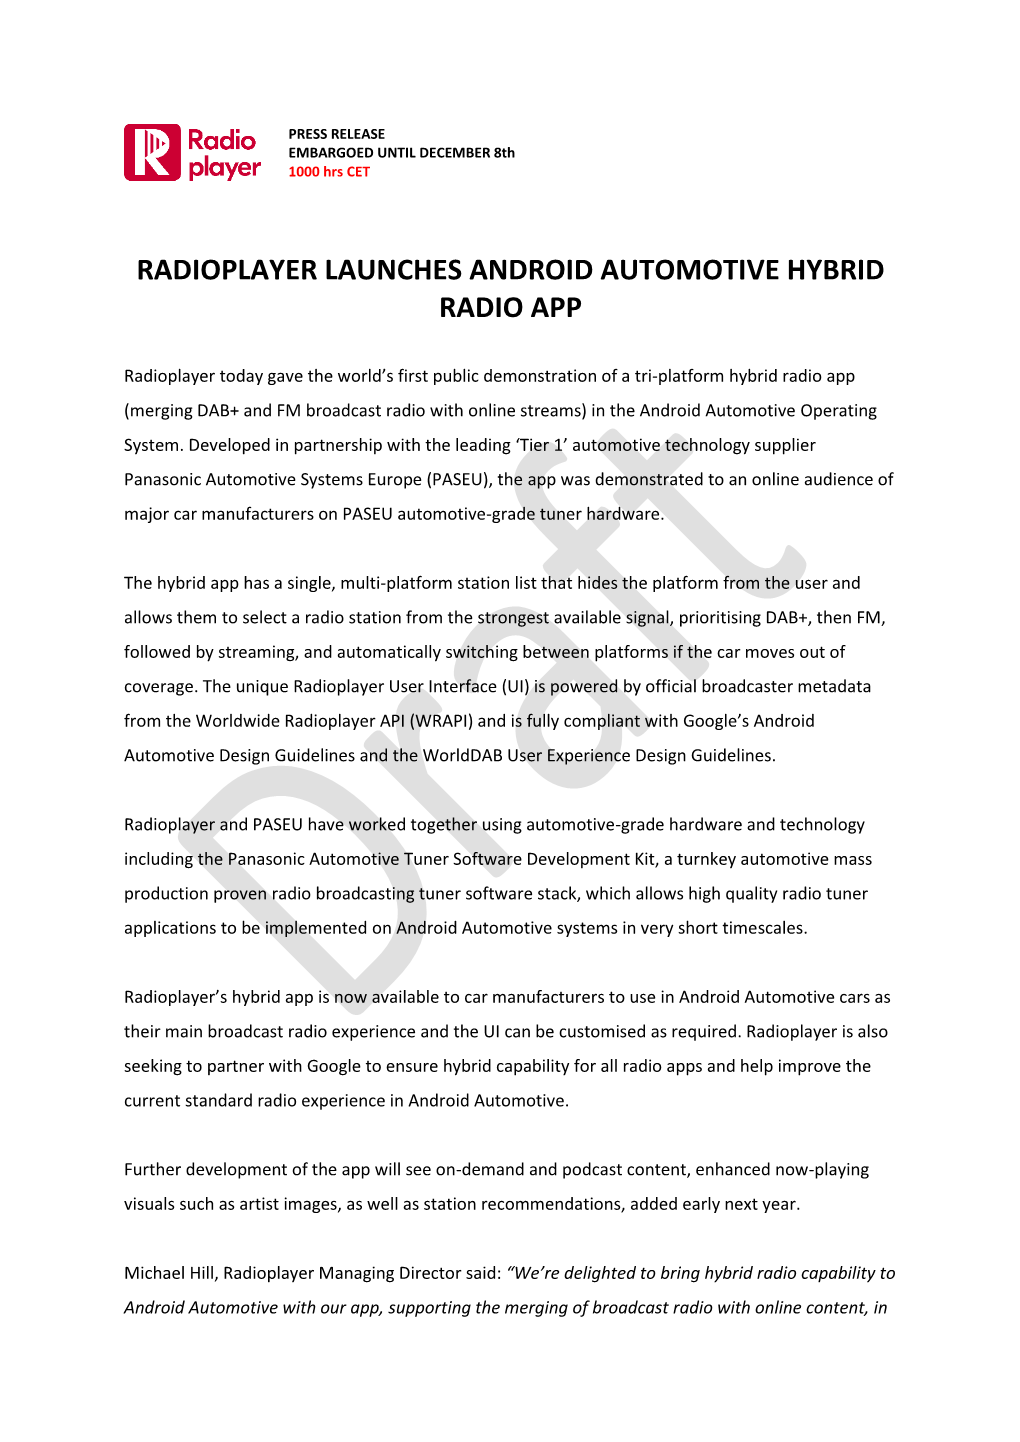 Radioplayer Launches Android Automotive Hybrid Radio App